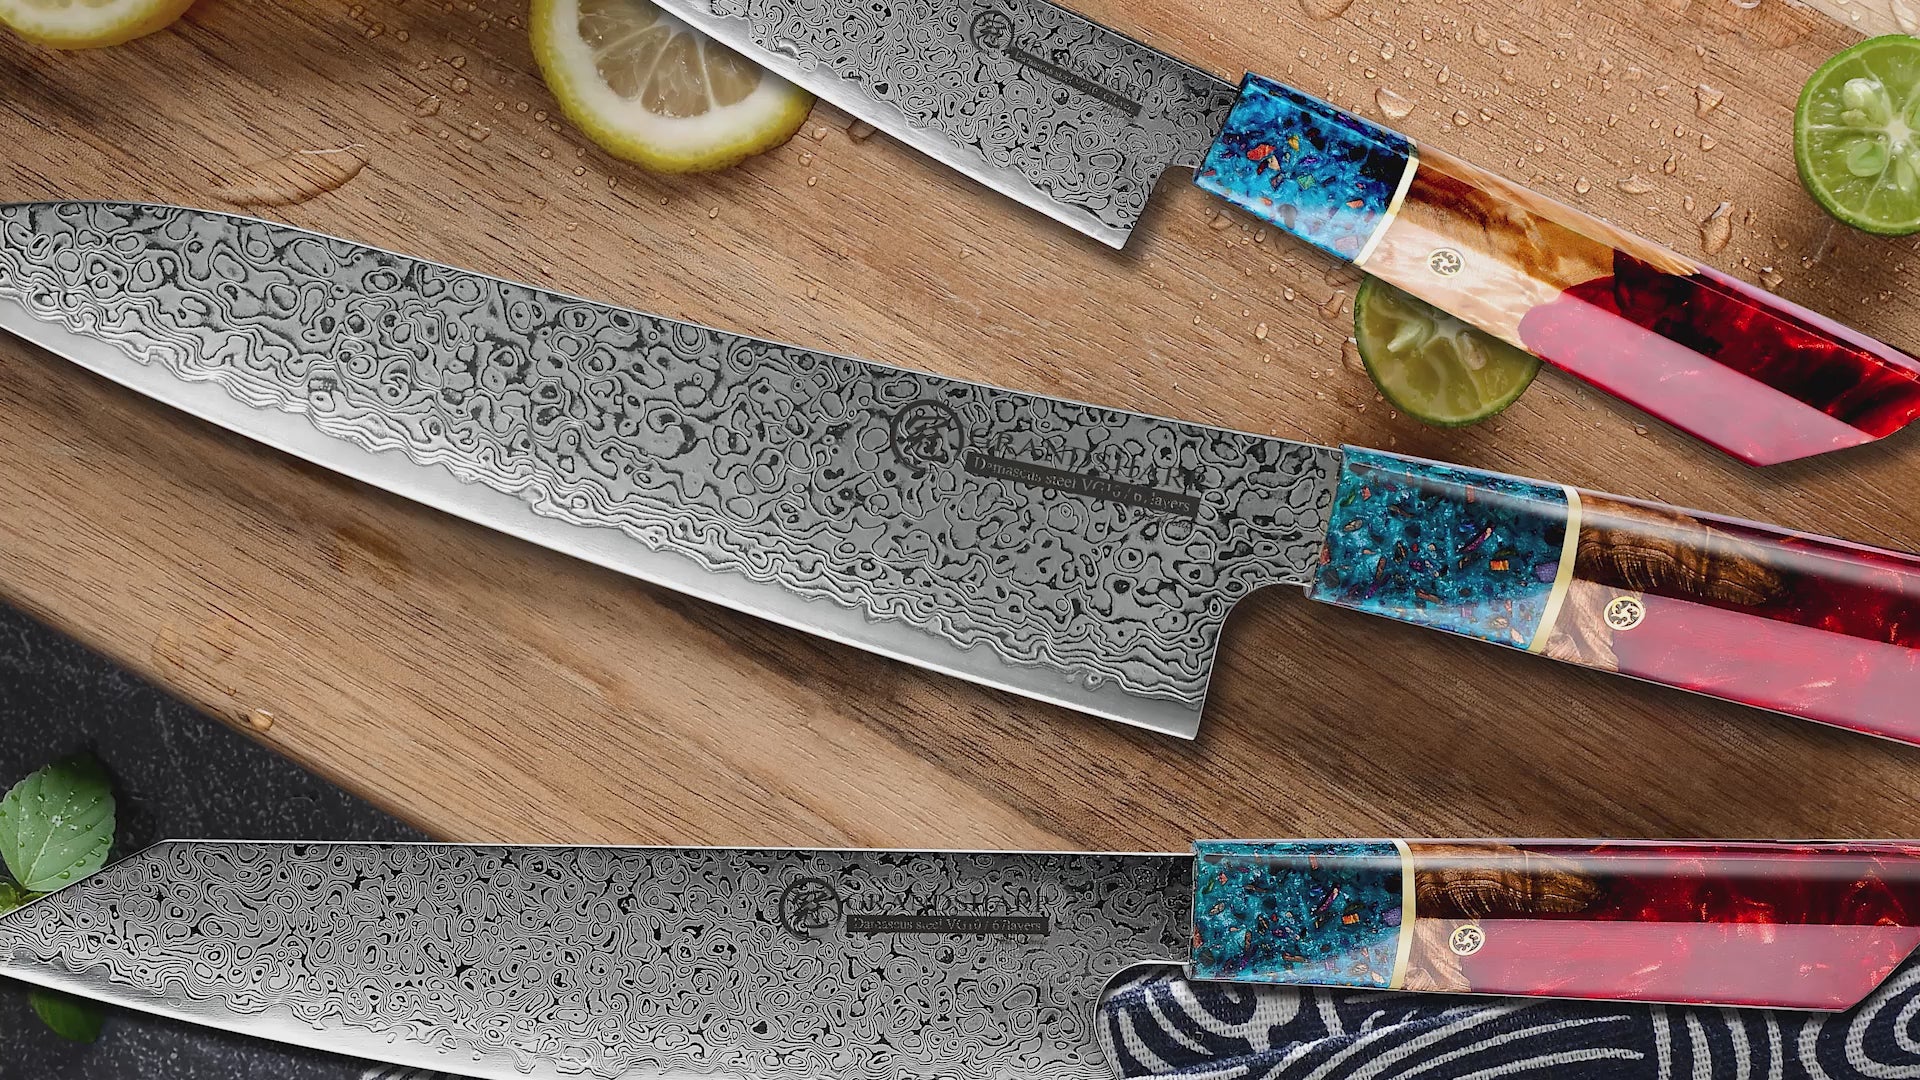 TURWHO 8.5 Japanese Kiritsuke Chef Knife 67-Layer Damascus Steel